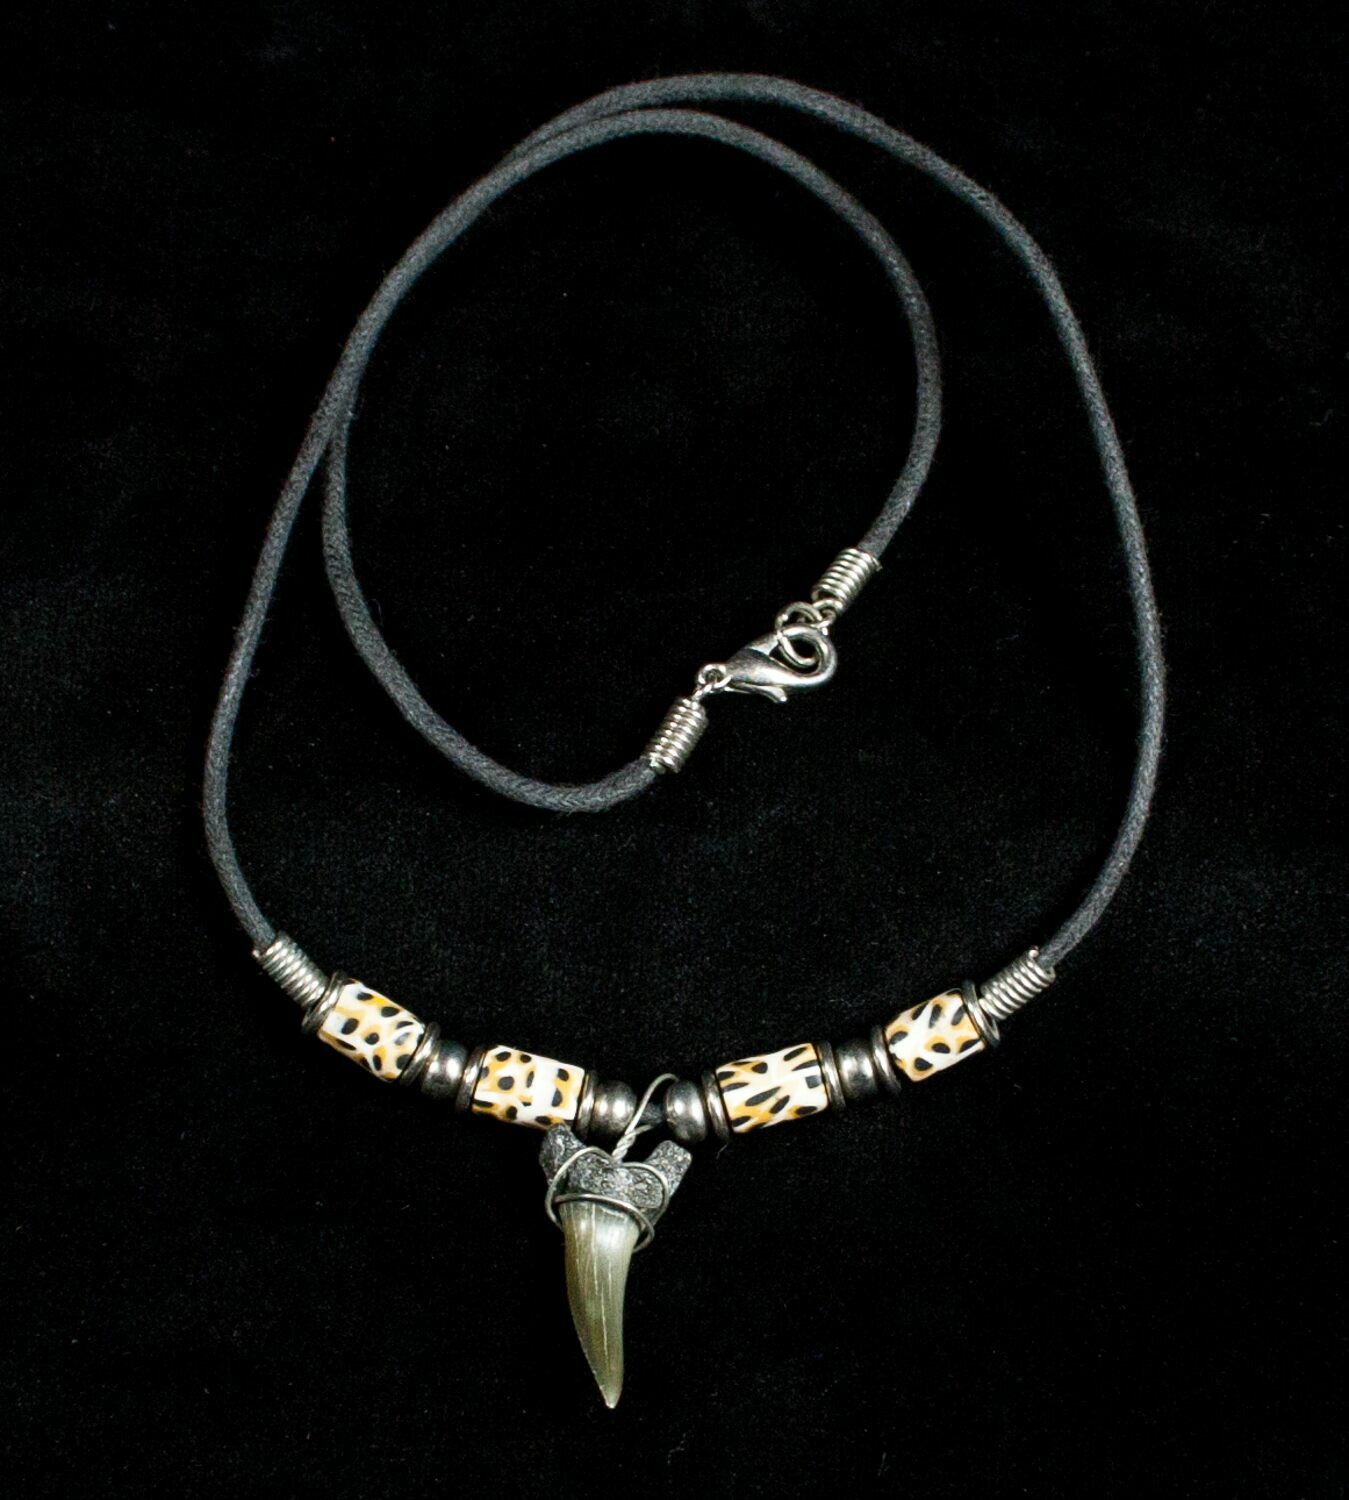 sand shark tooth necklace calamity